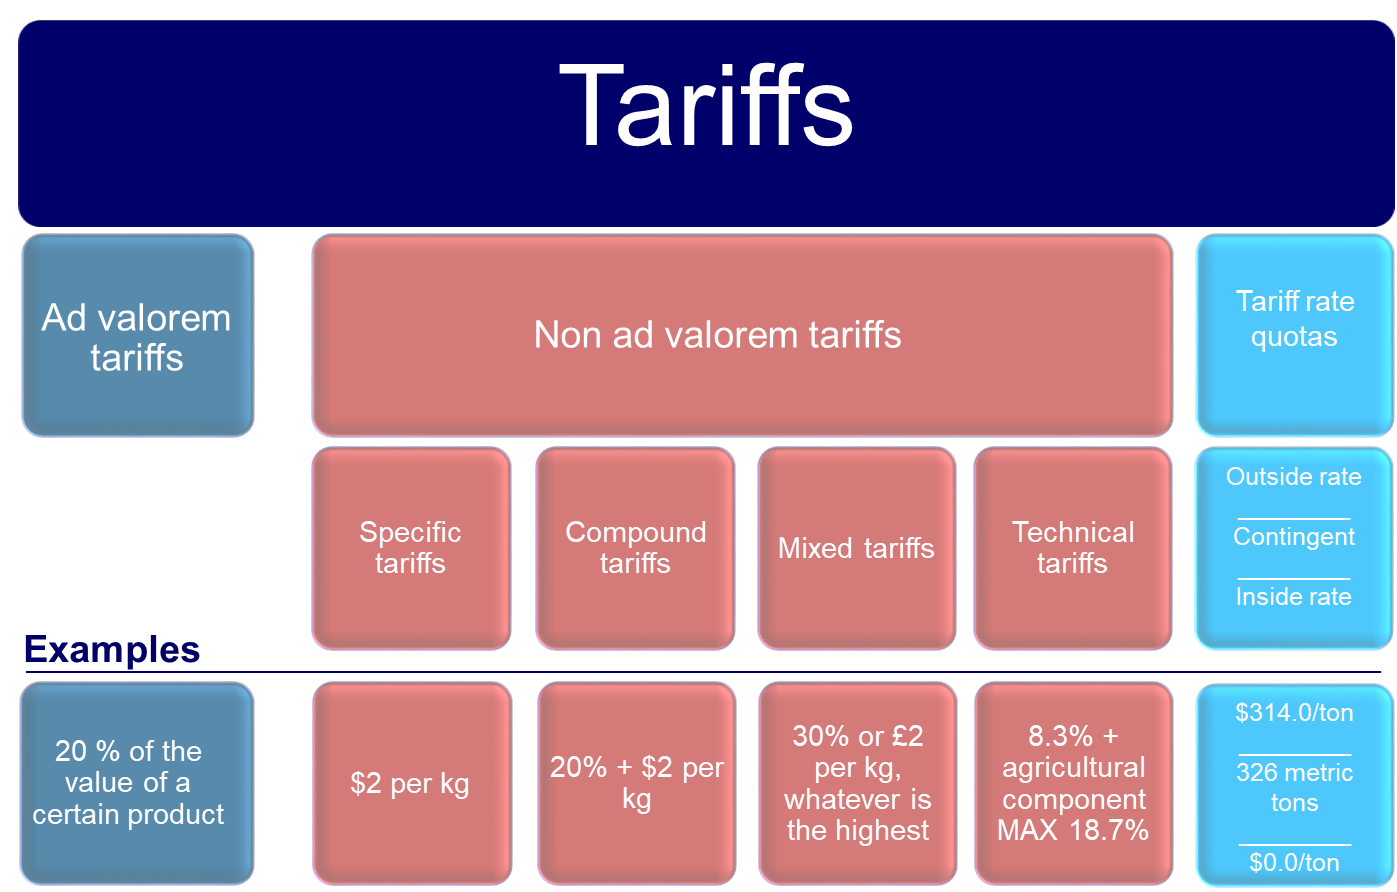 Forms of Cutoms Tariffs